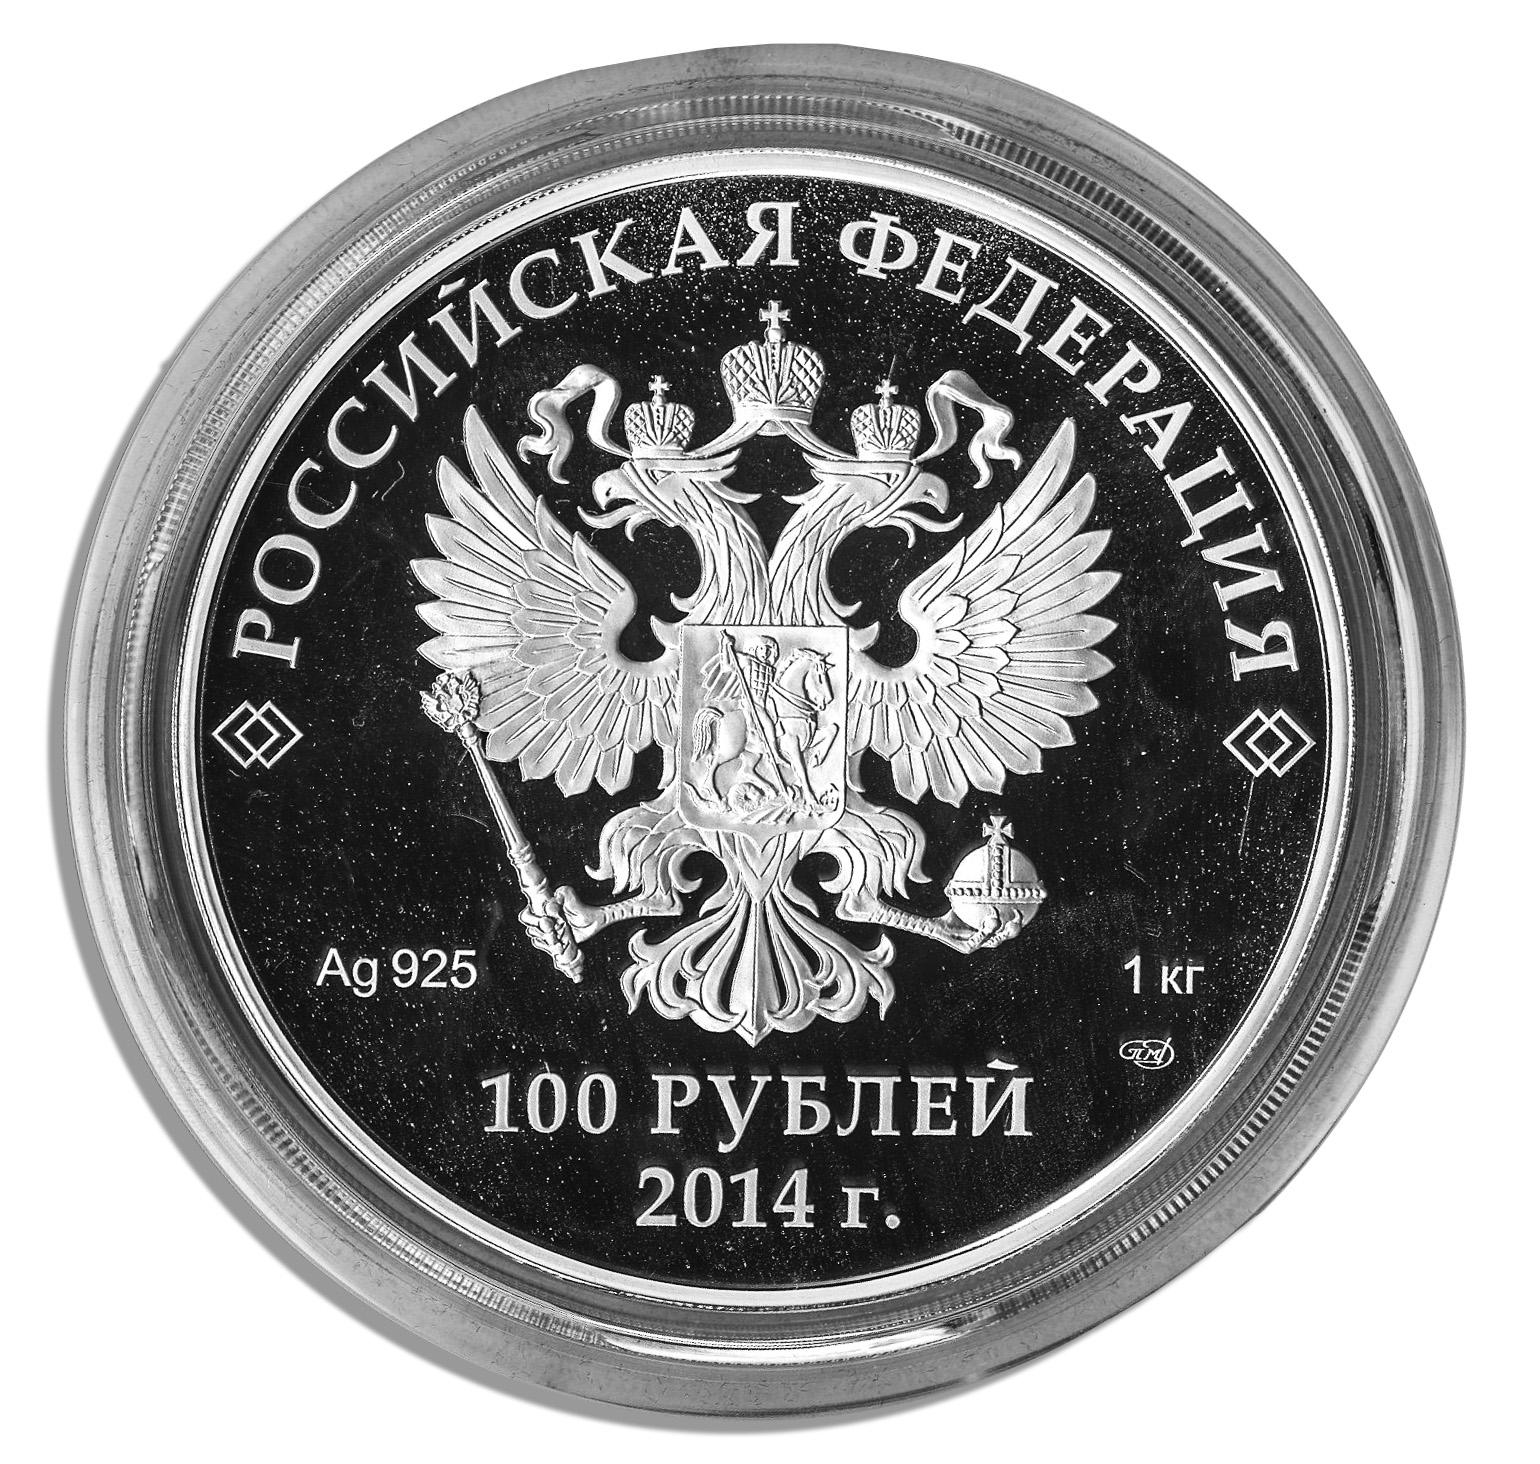 Купить монету сочи. Сочи серебряная монета 5 руб 2014 медведь. Сочи серебряная монета 5 руб 2014. 1 Рубль вектор.